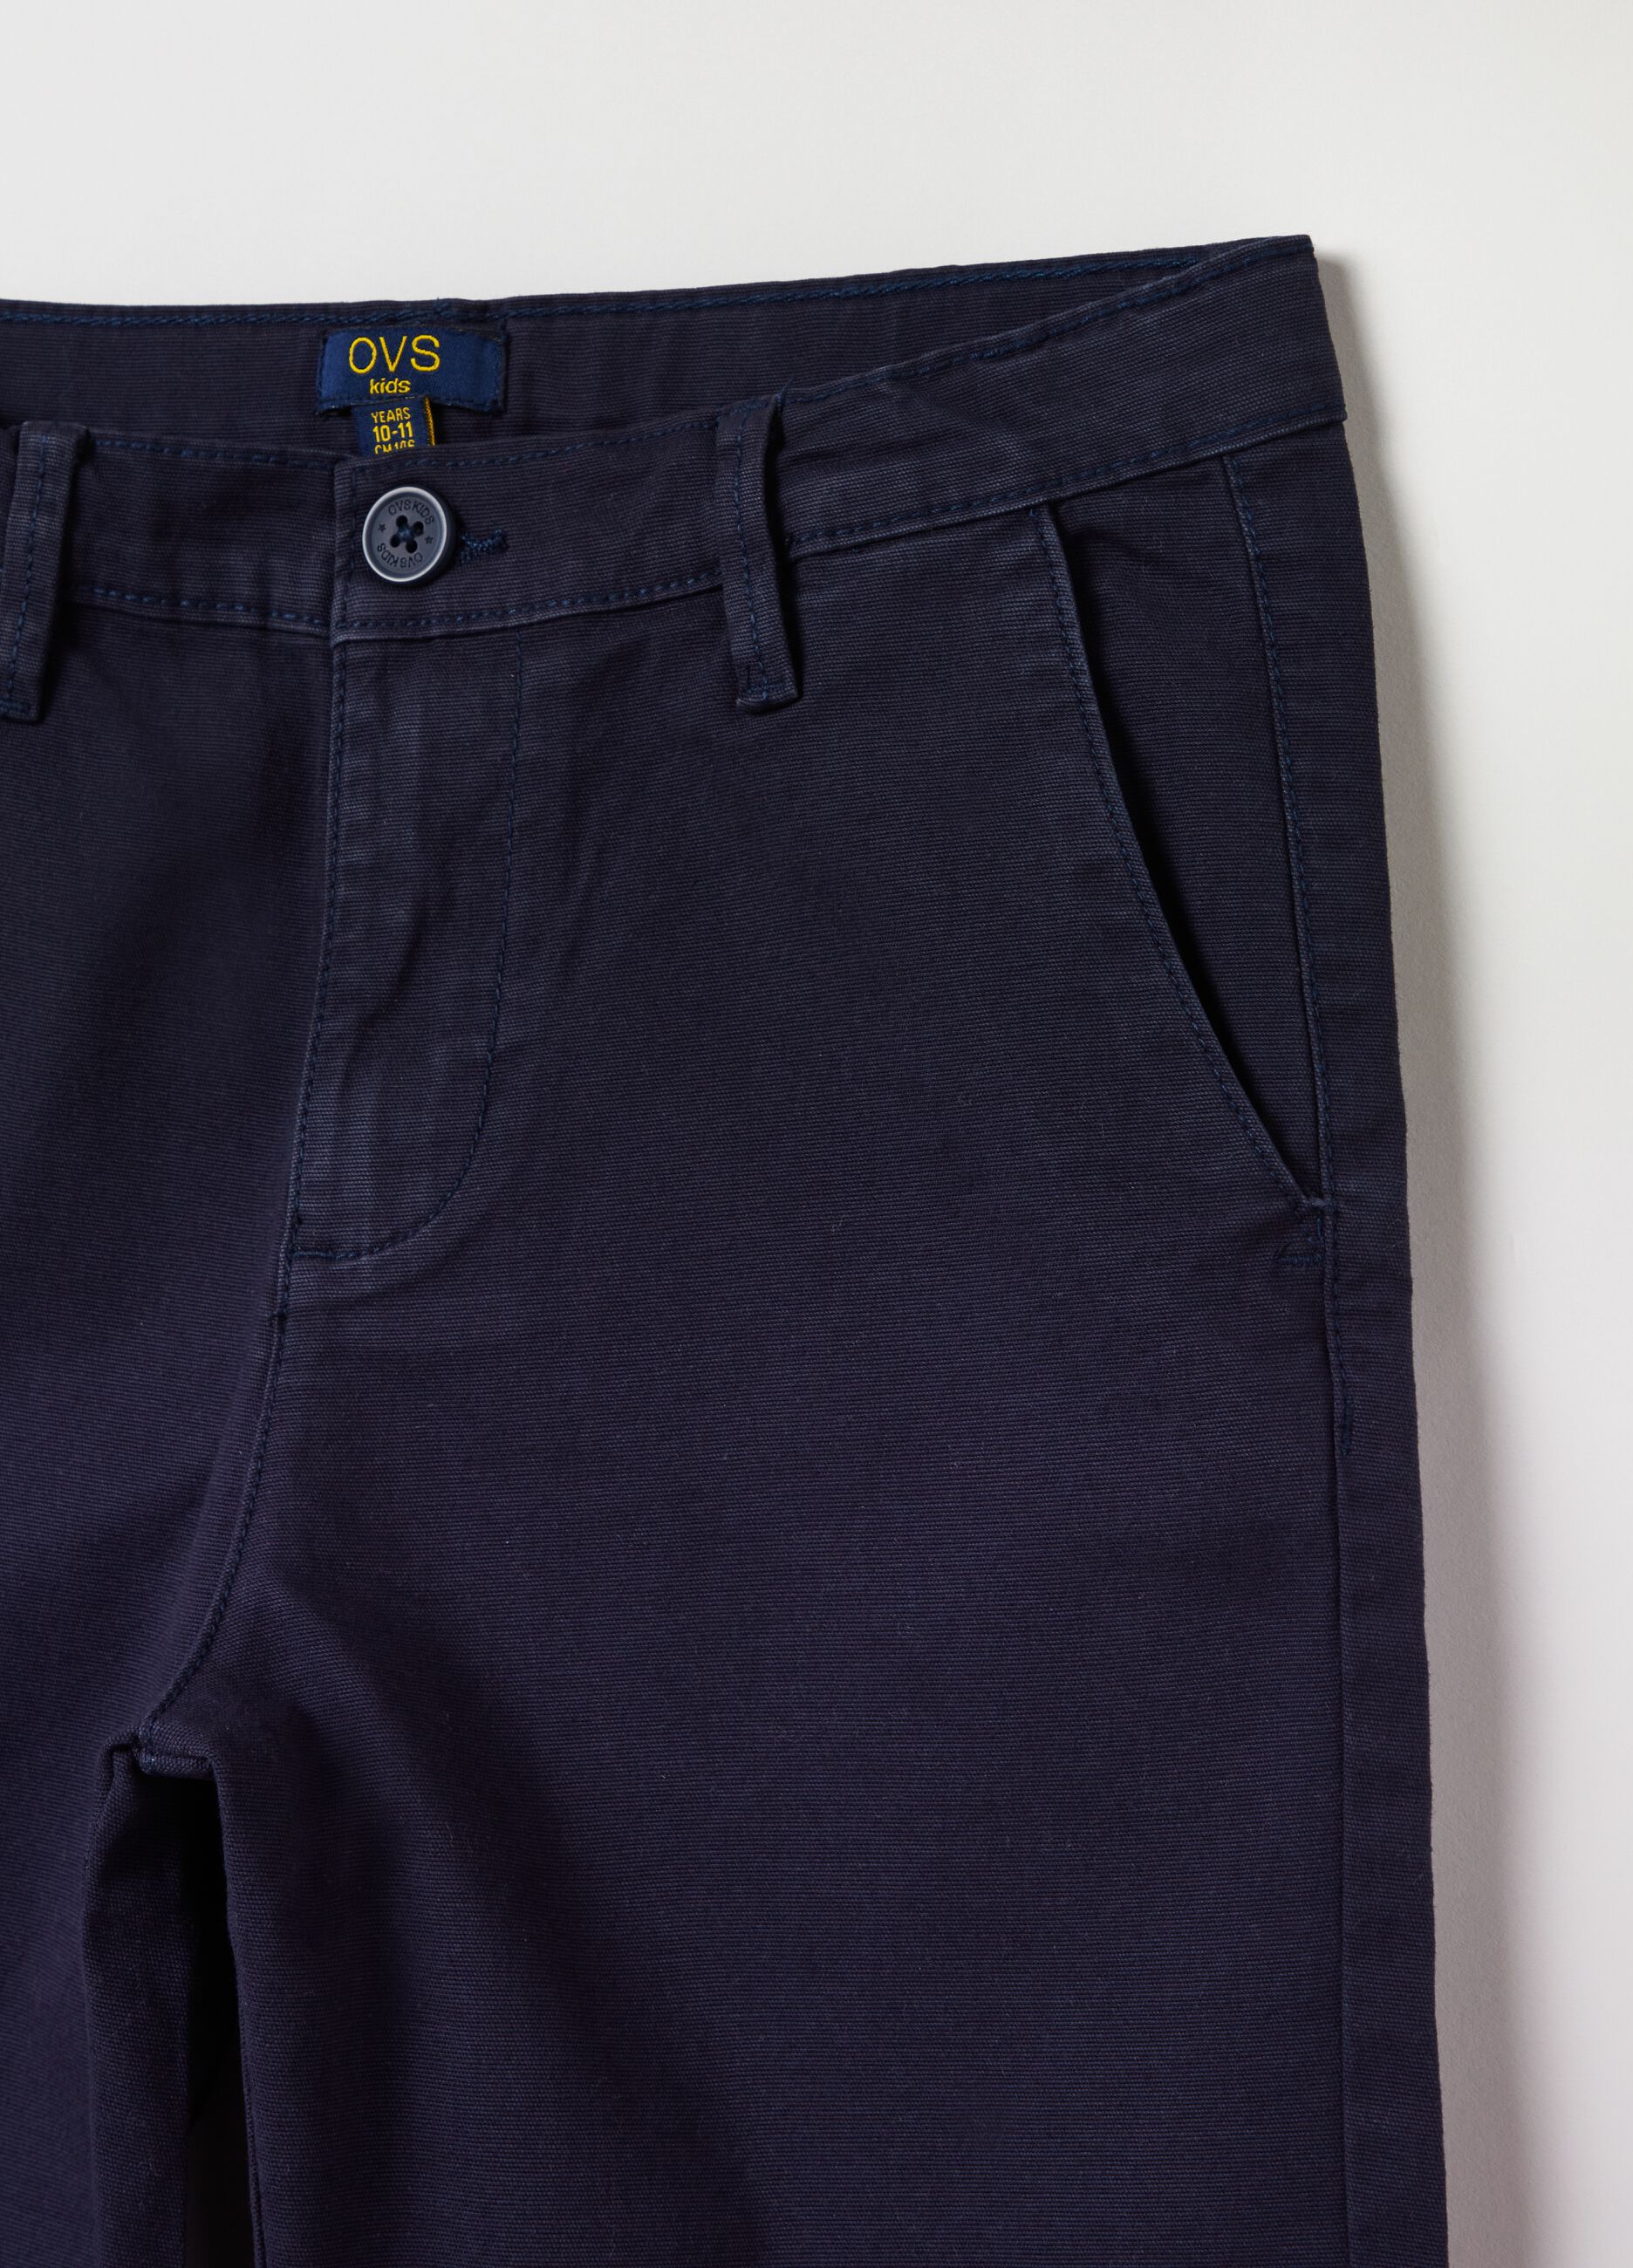 Chino Bermuda shorts in dobby with pockets